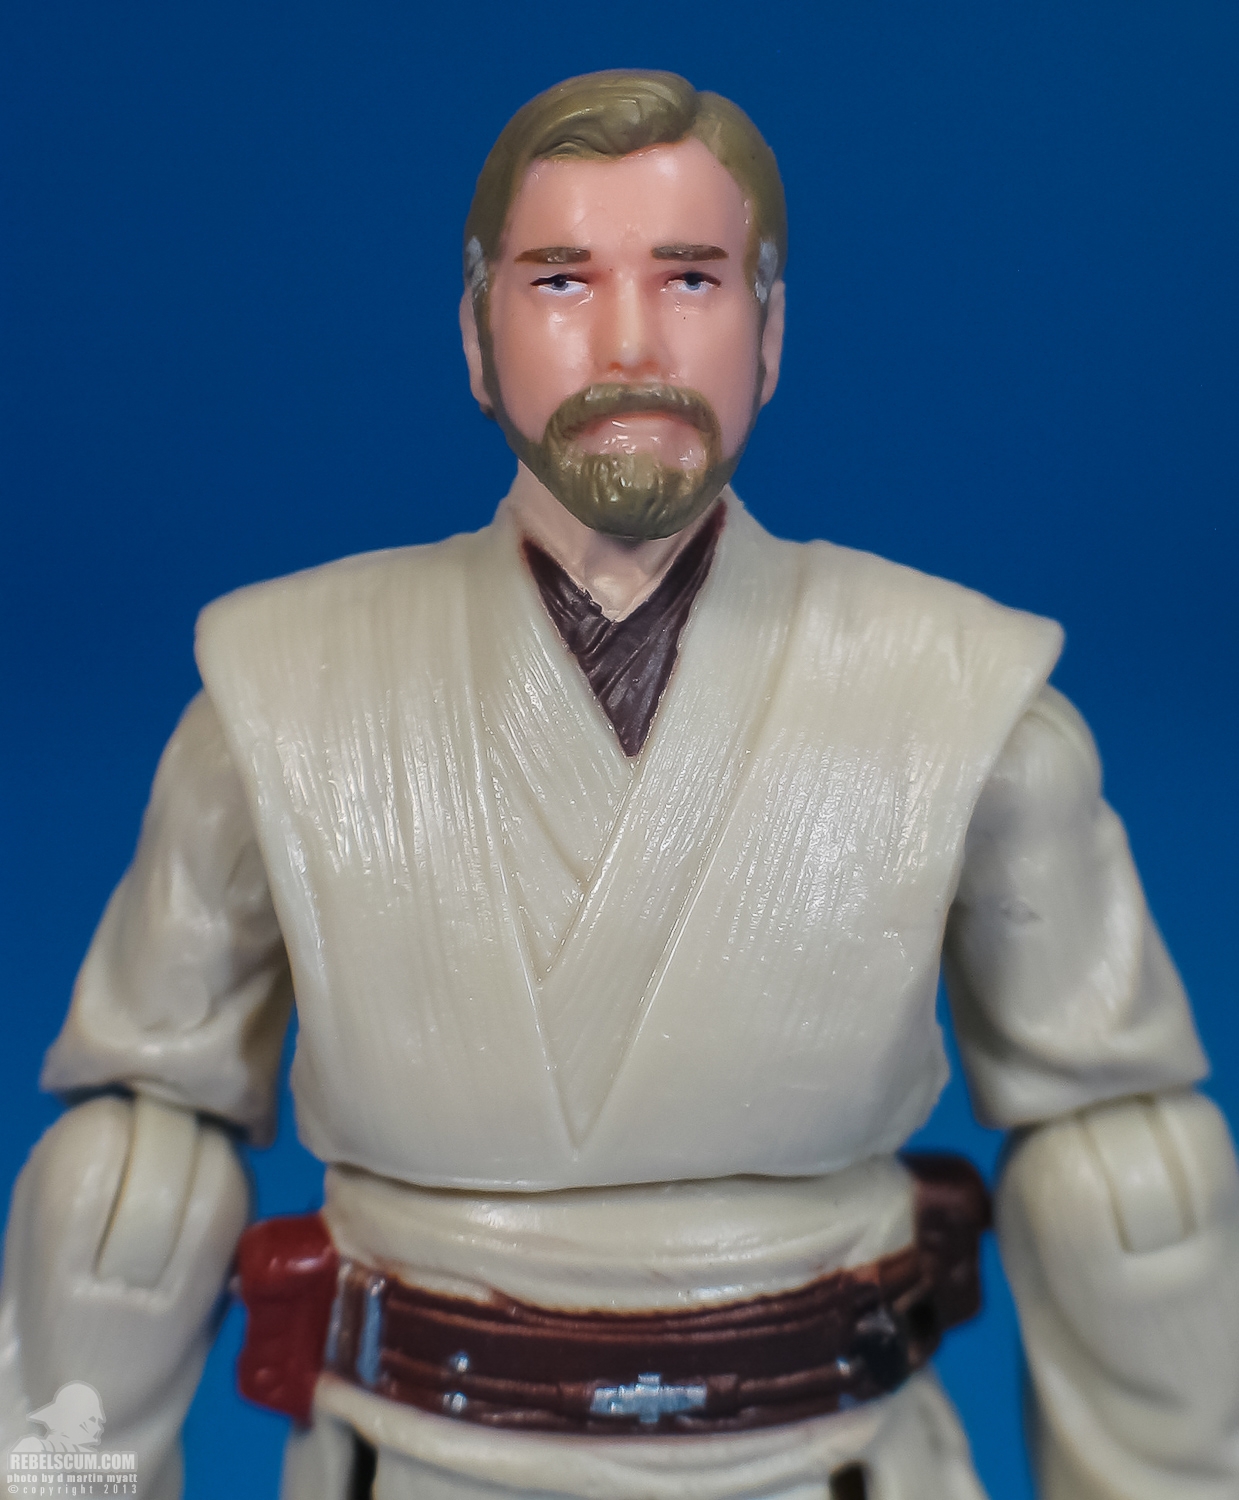 Obi-Wan_Kenobi_ROTS_Vintage_Collection_TVC_VC16-05.jpg